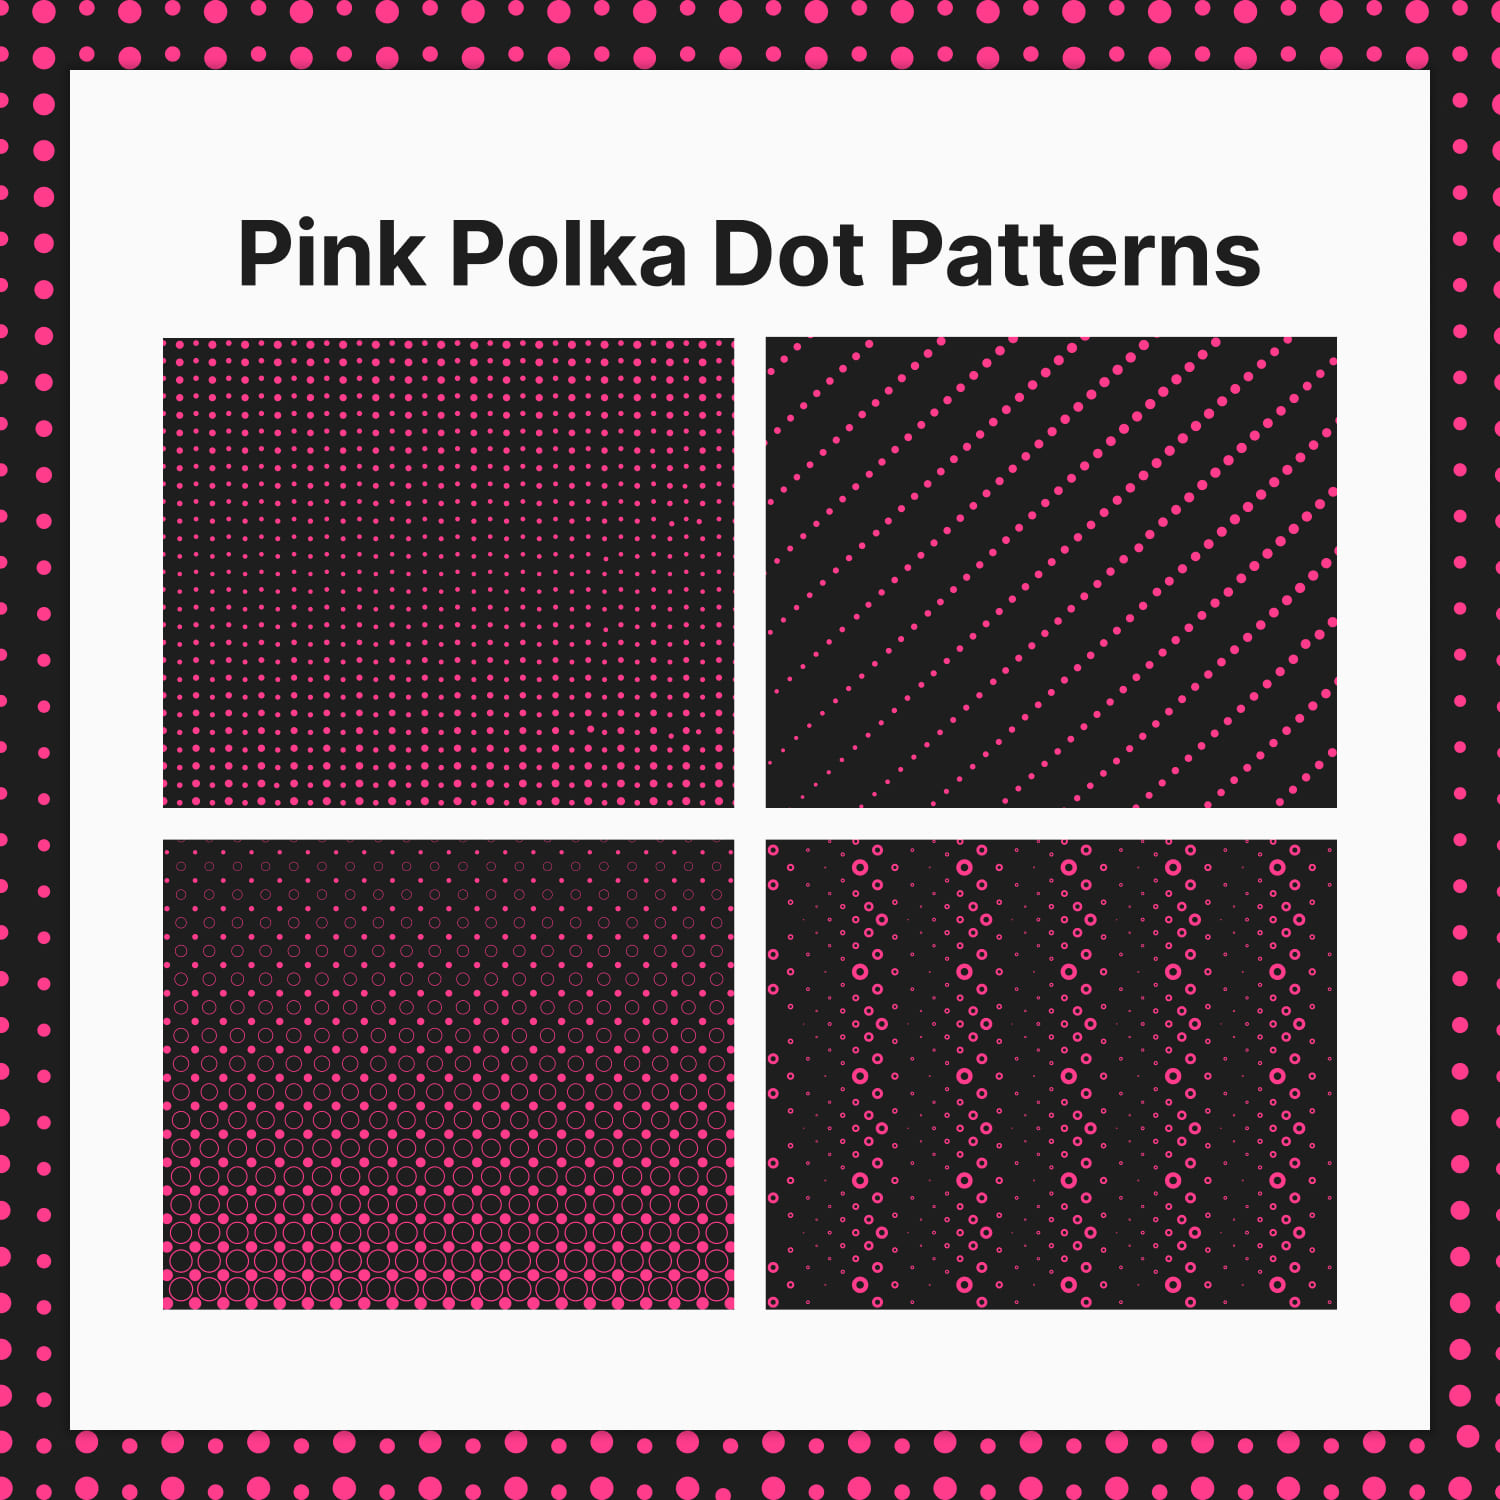 pink polka dot patterns.